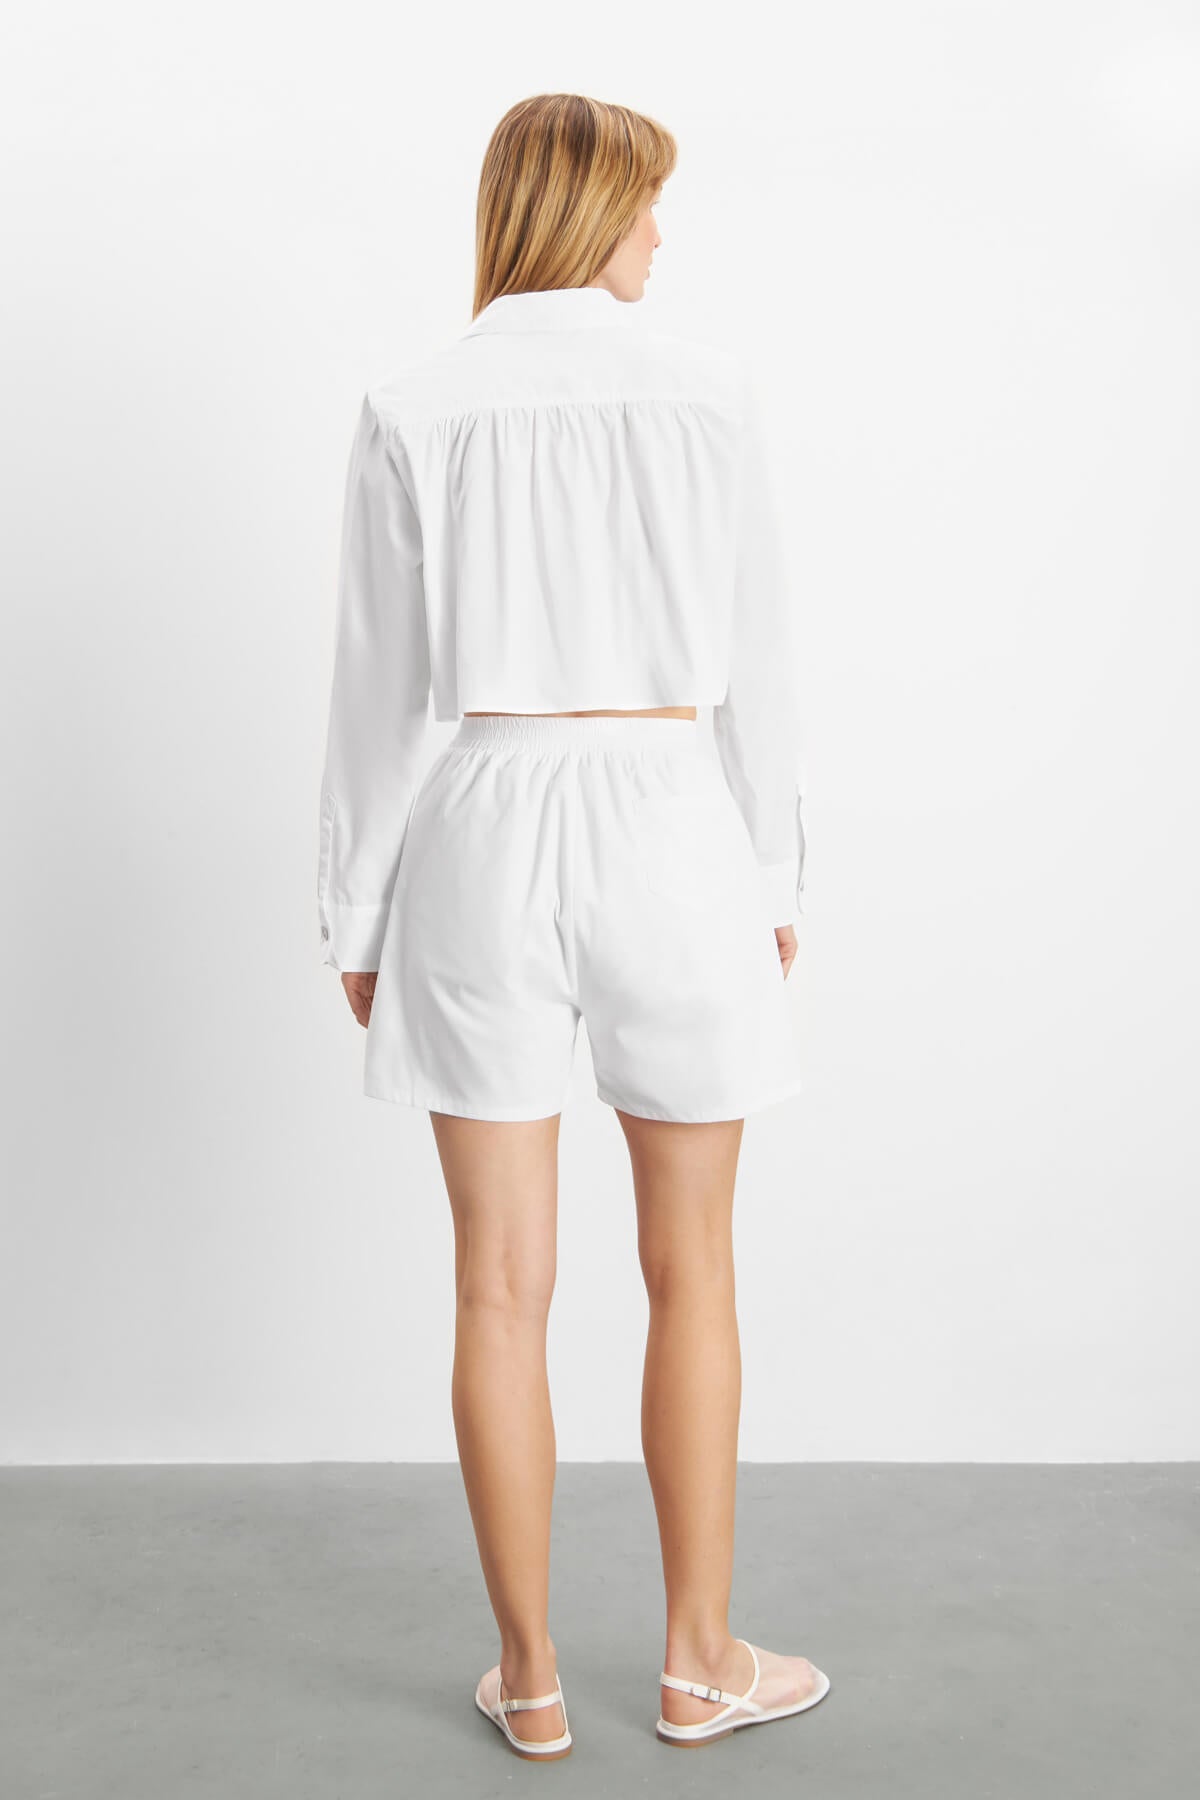 Hurley Shorts - White